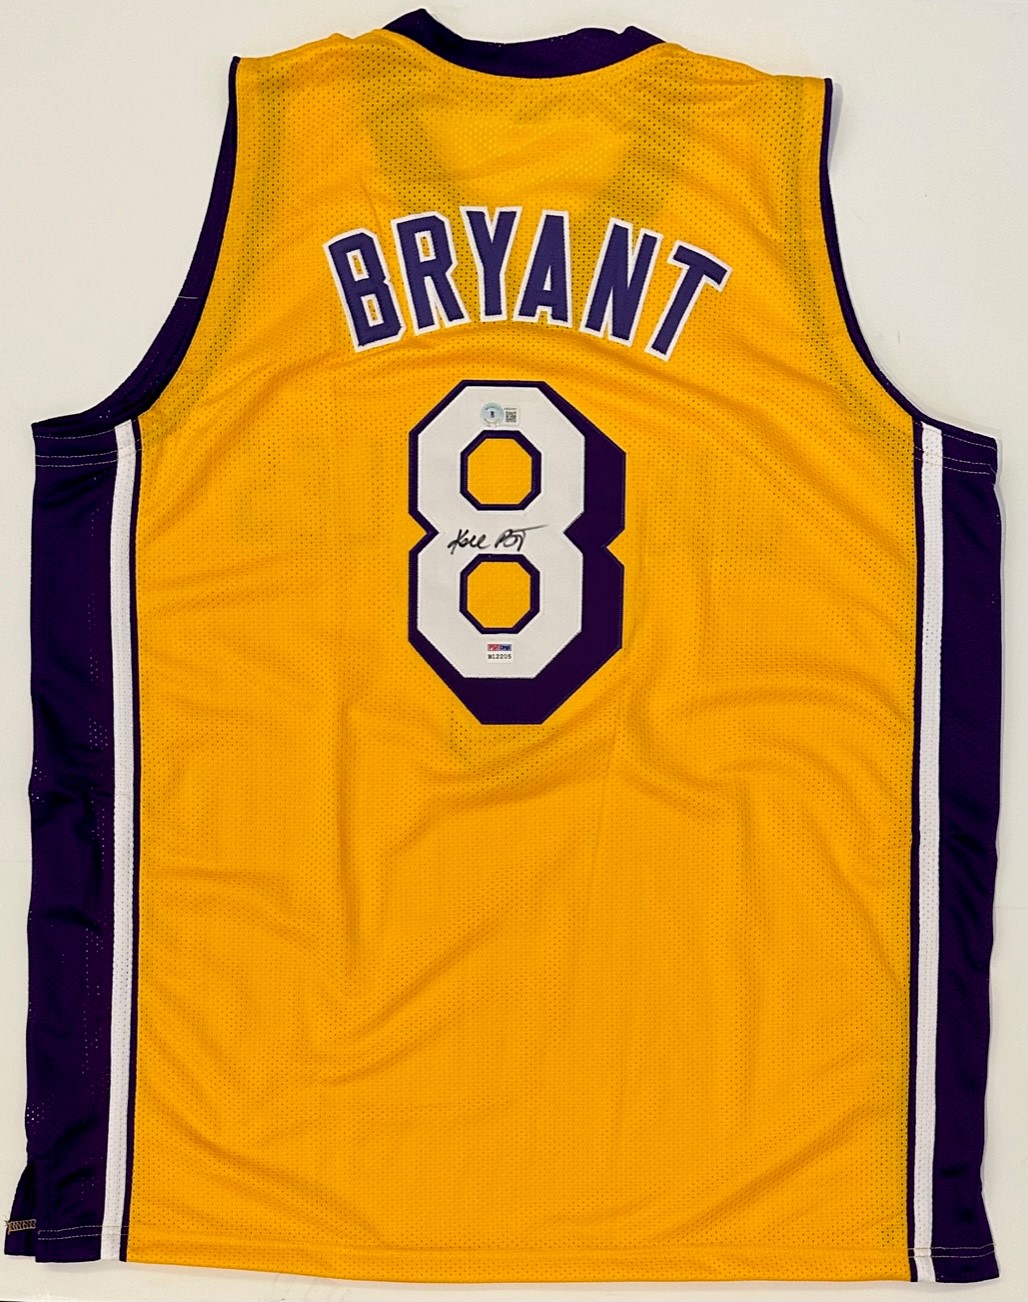 Replica Kobe Bryant Jersey Poster 